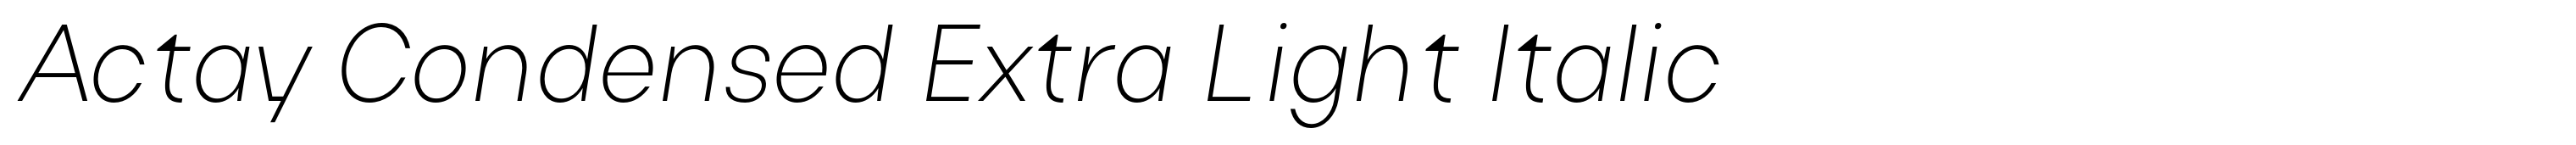 Actay Condensed Extra Light Italic